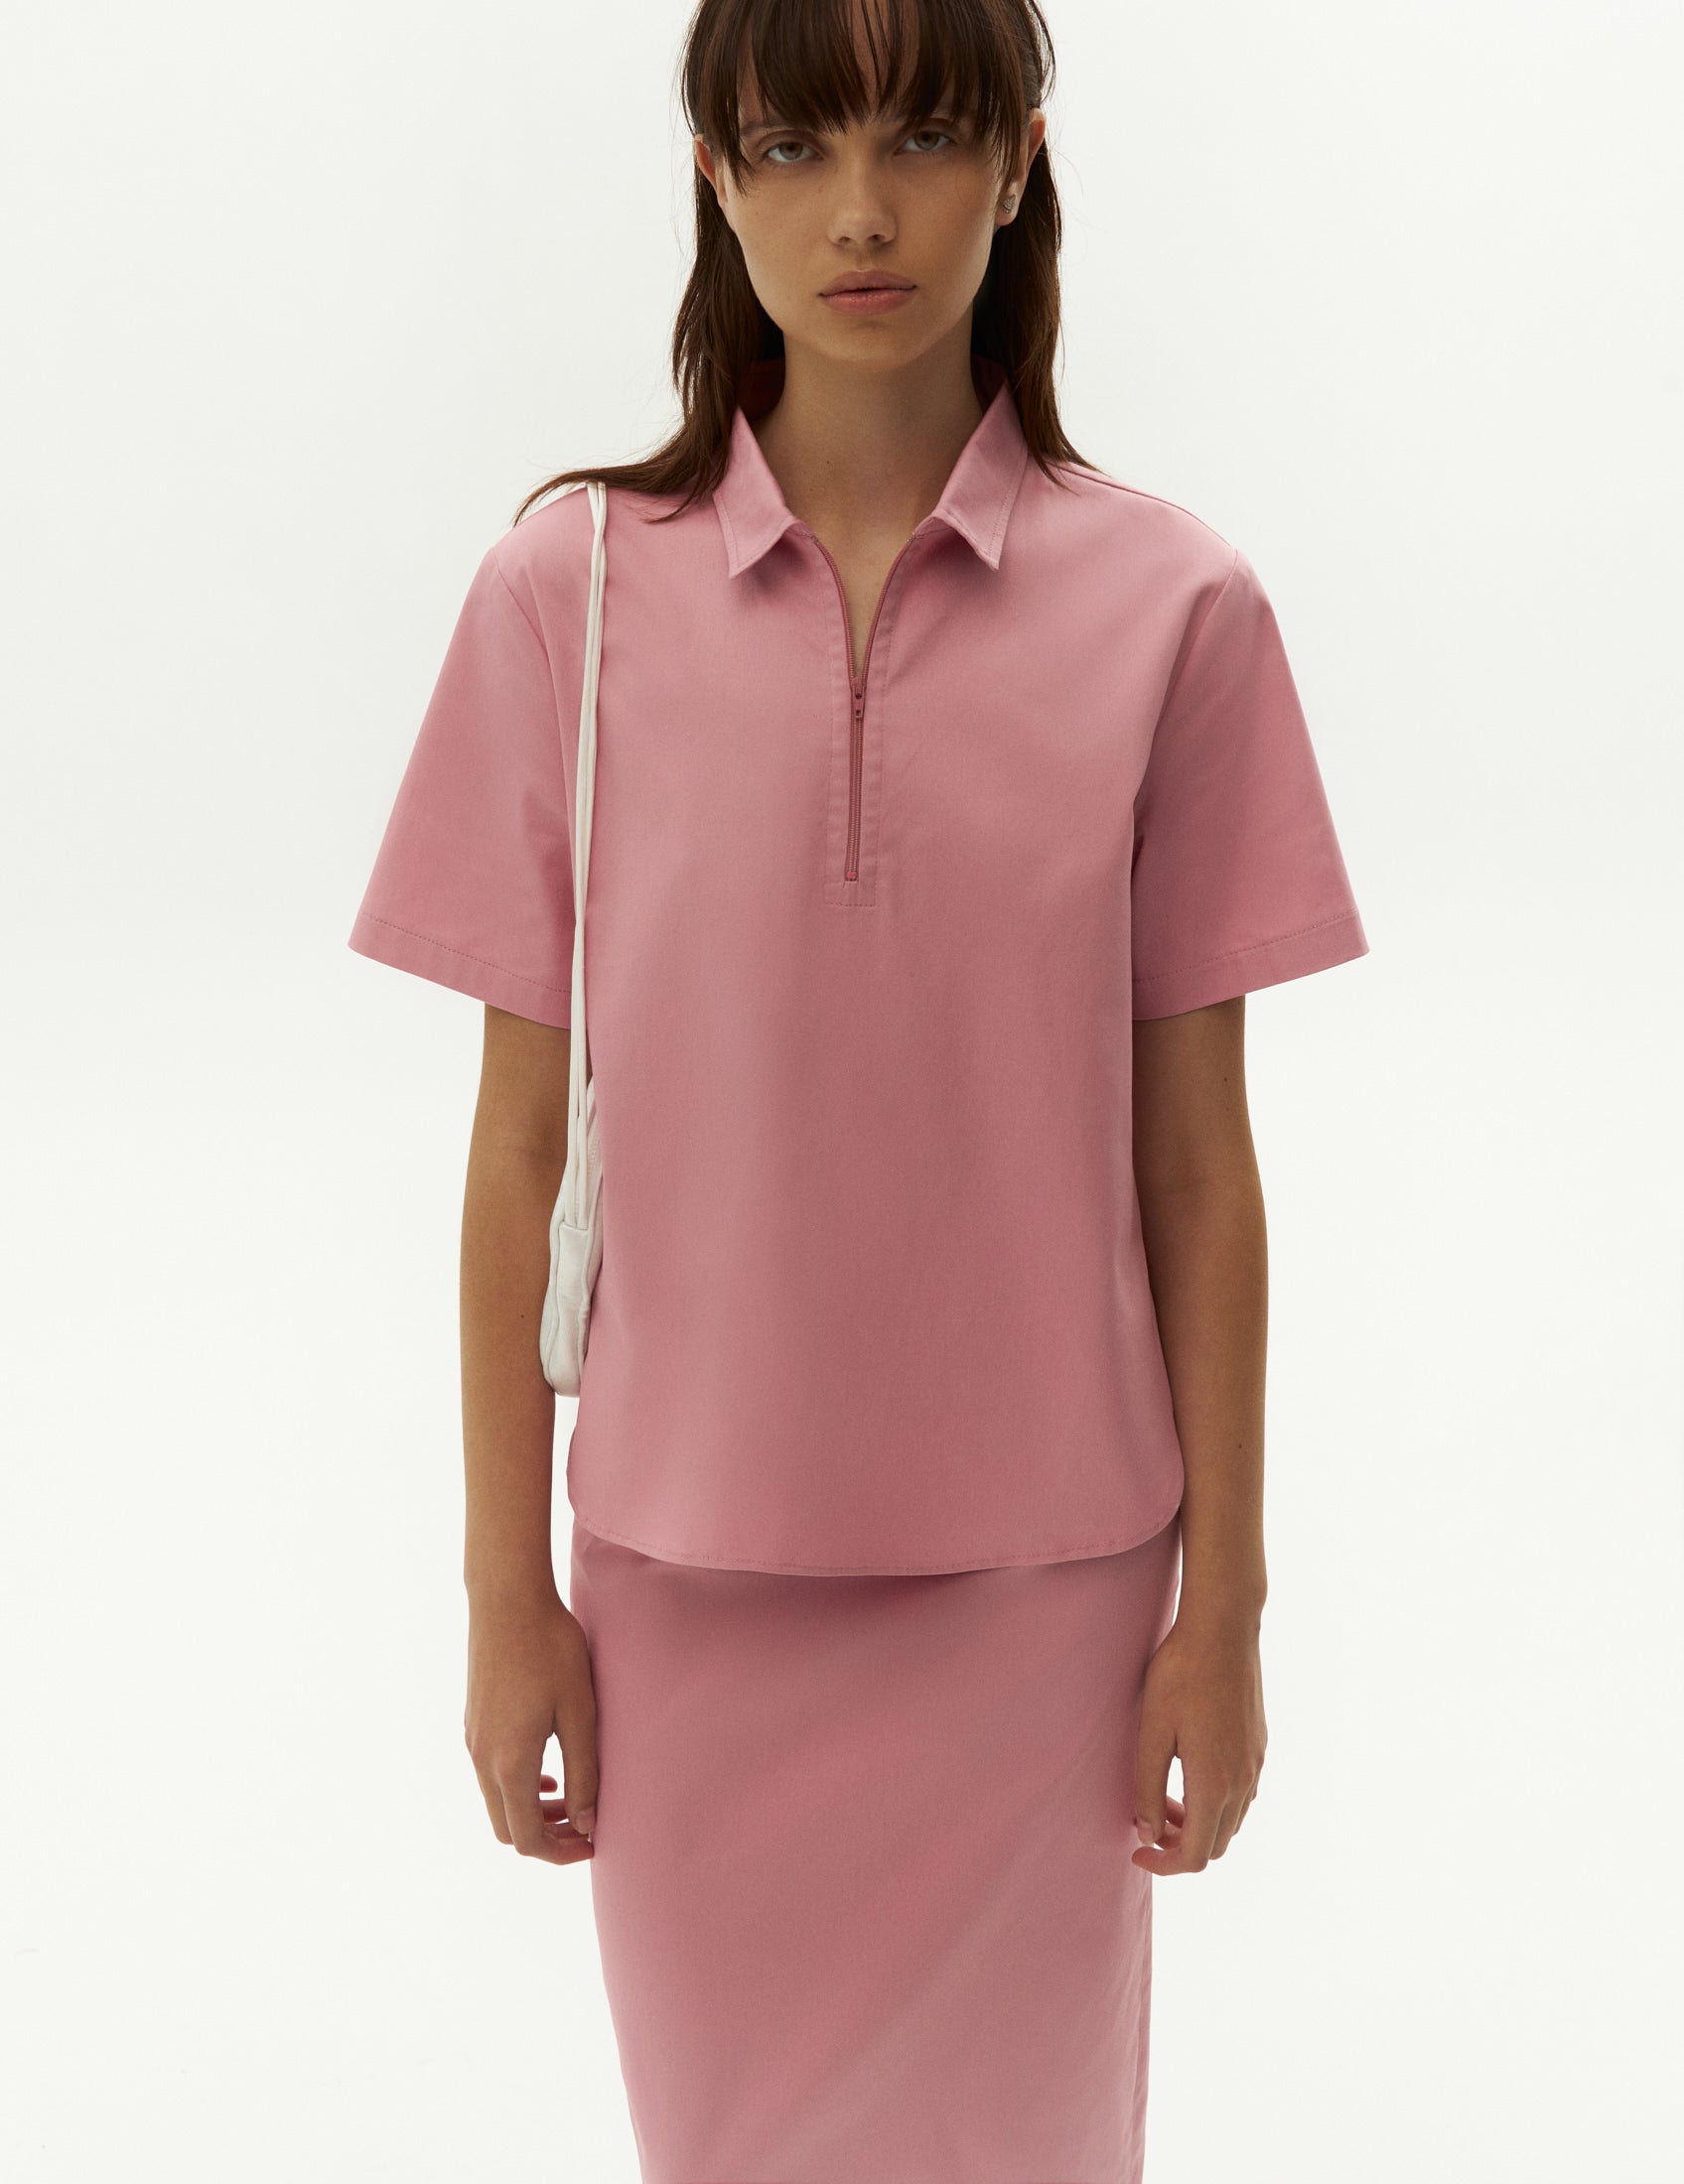 Fashion pink suit from FORMA brand, clothing online. Довга спідниця рожевого кольору із бавовни від бренду ФОРМА. Pink summer suit polo and skirt. Shop FORMA online